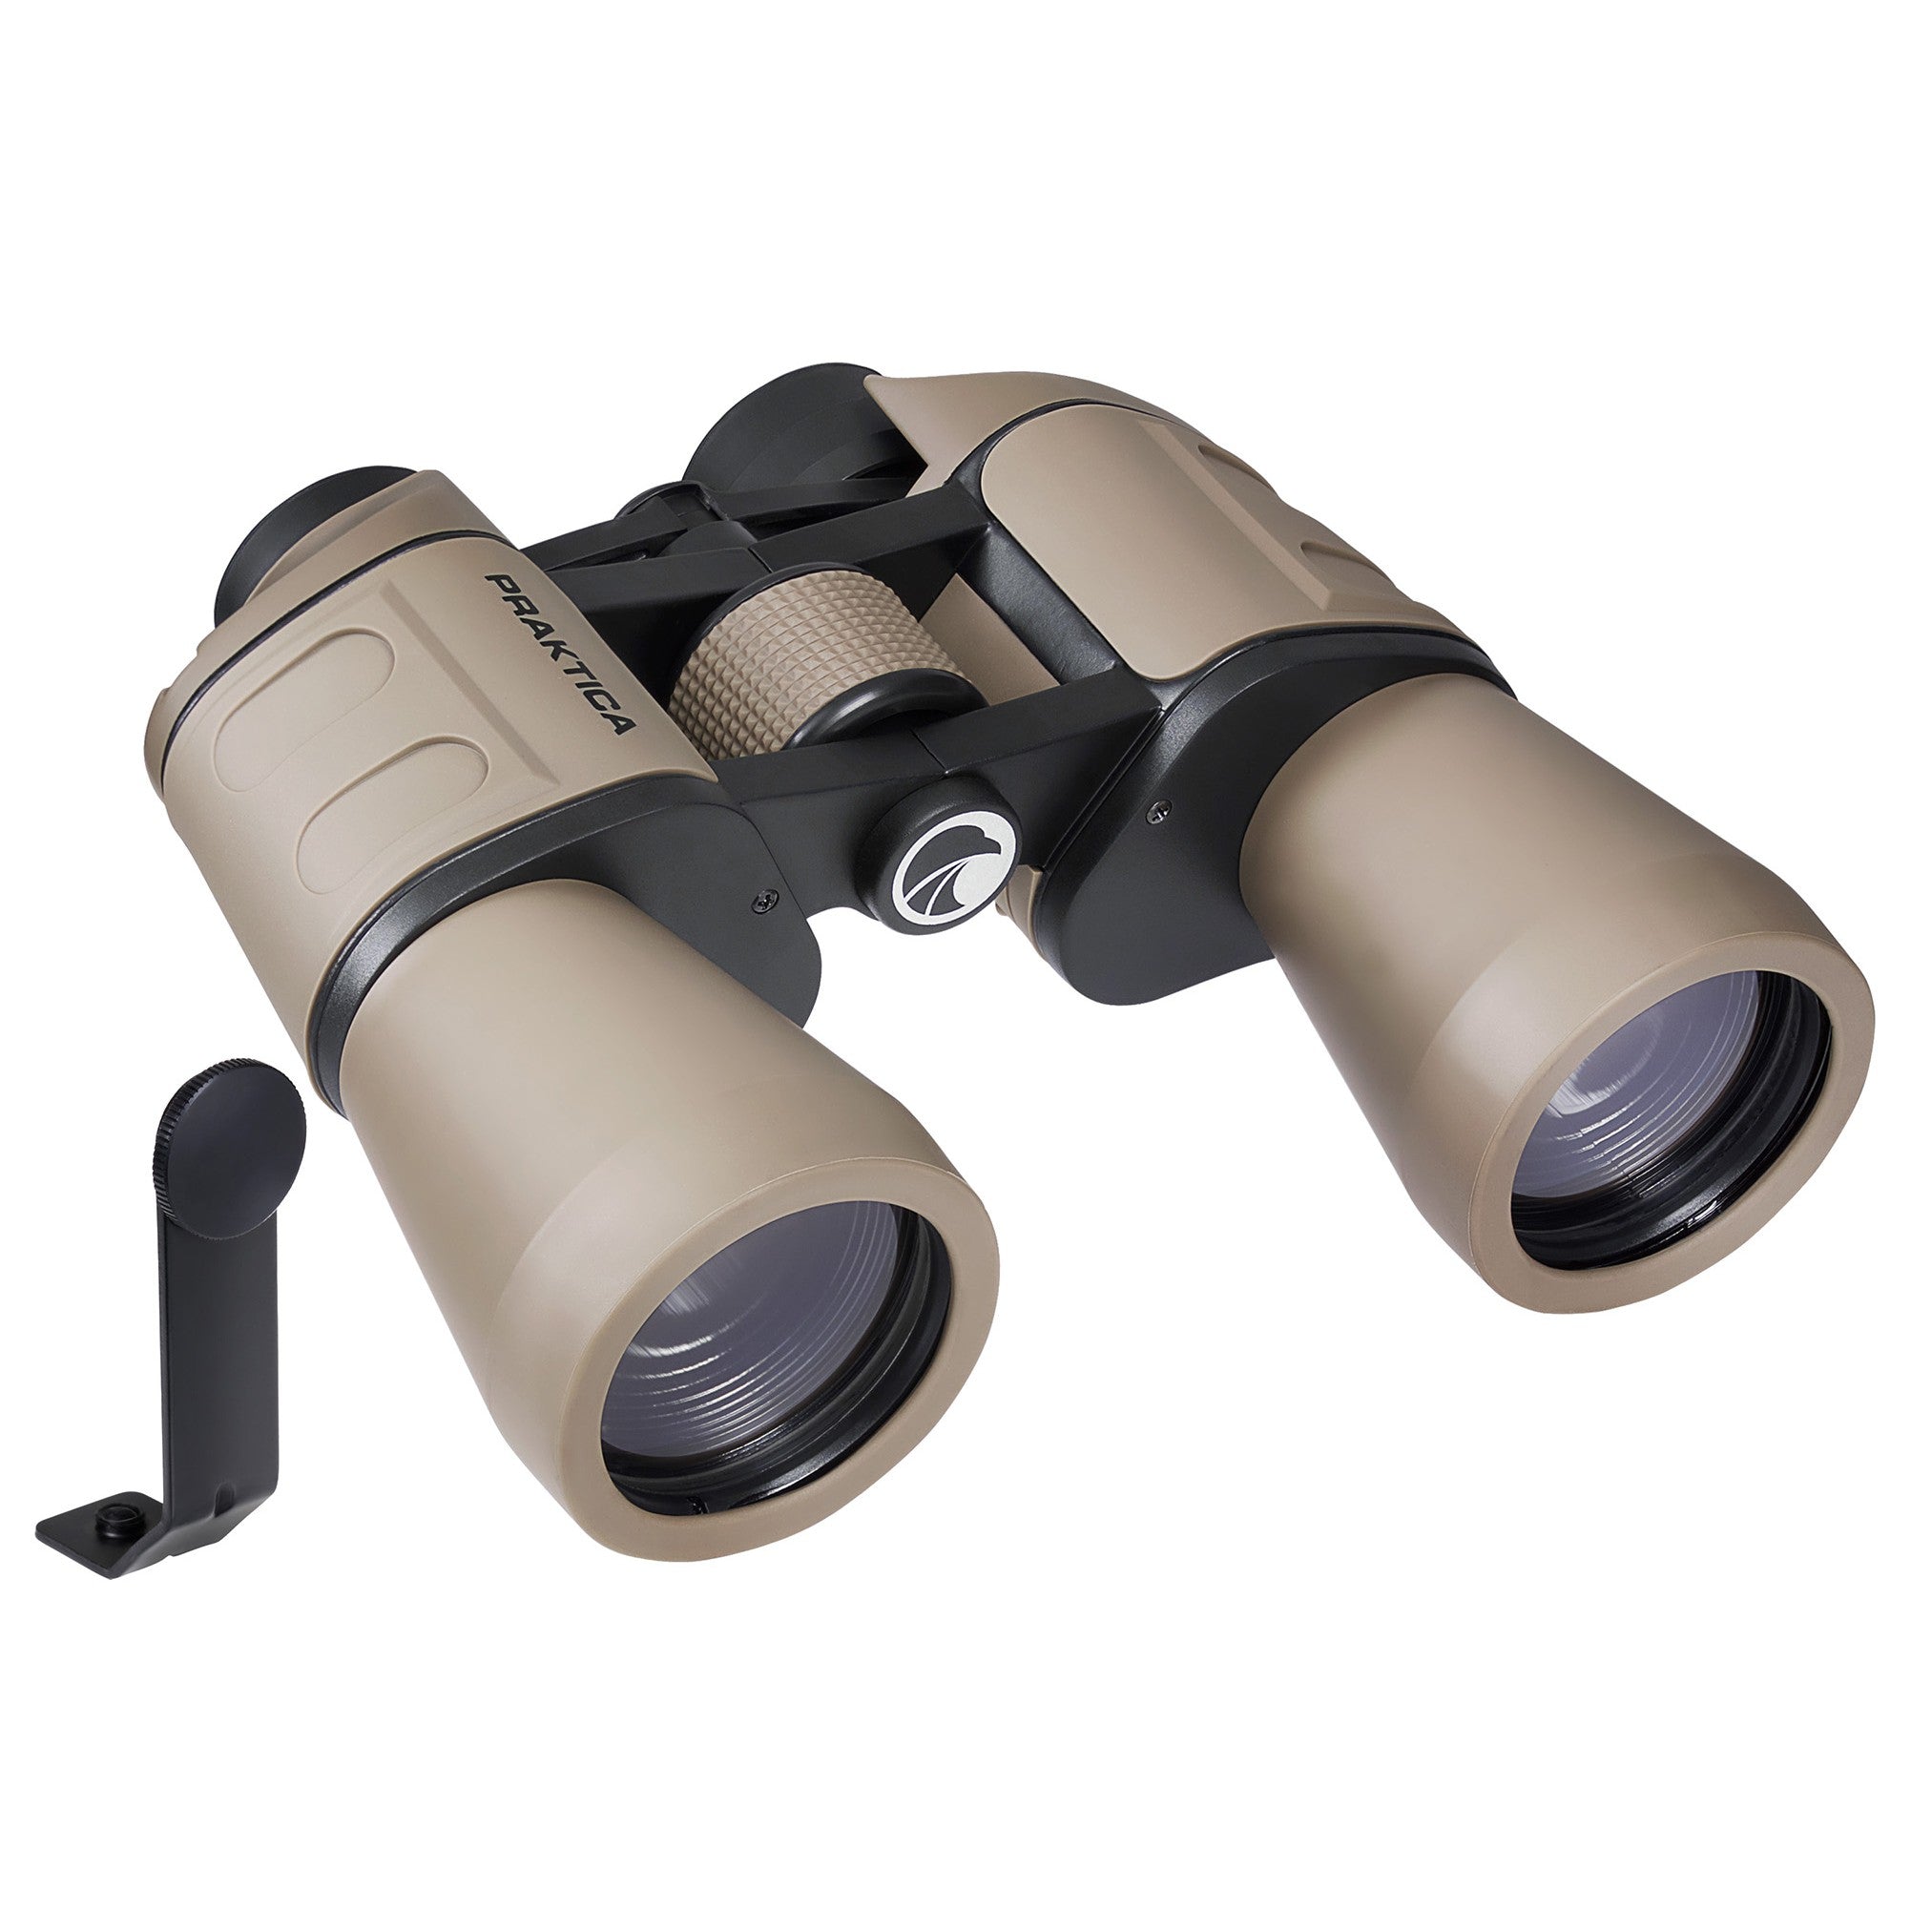 PRAKTICA Falcon 10x50mm Porro Prism Field Binoculars - Sand (Binoculars + Tripod Mount)